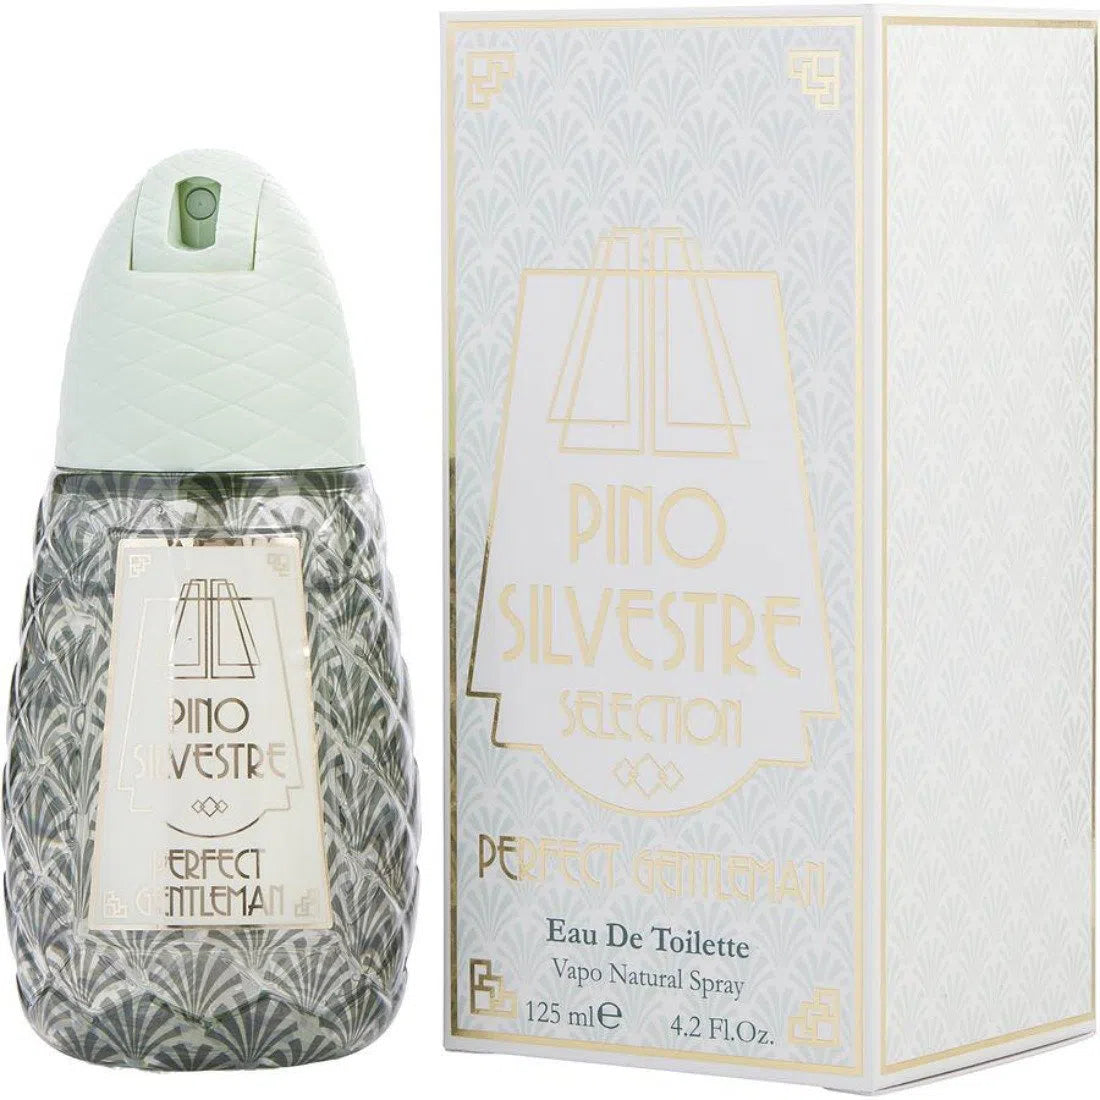 Perfume Pino Silvestre Selection Perfect Gentleman EDT (M) / 125 ml - 679602411226- Prive Perfumes Honduras